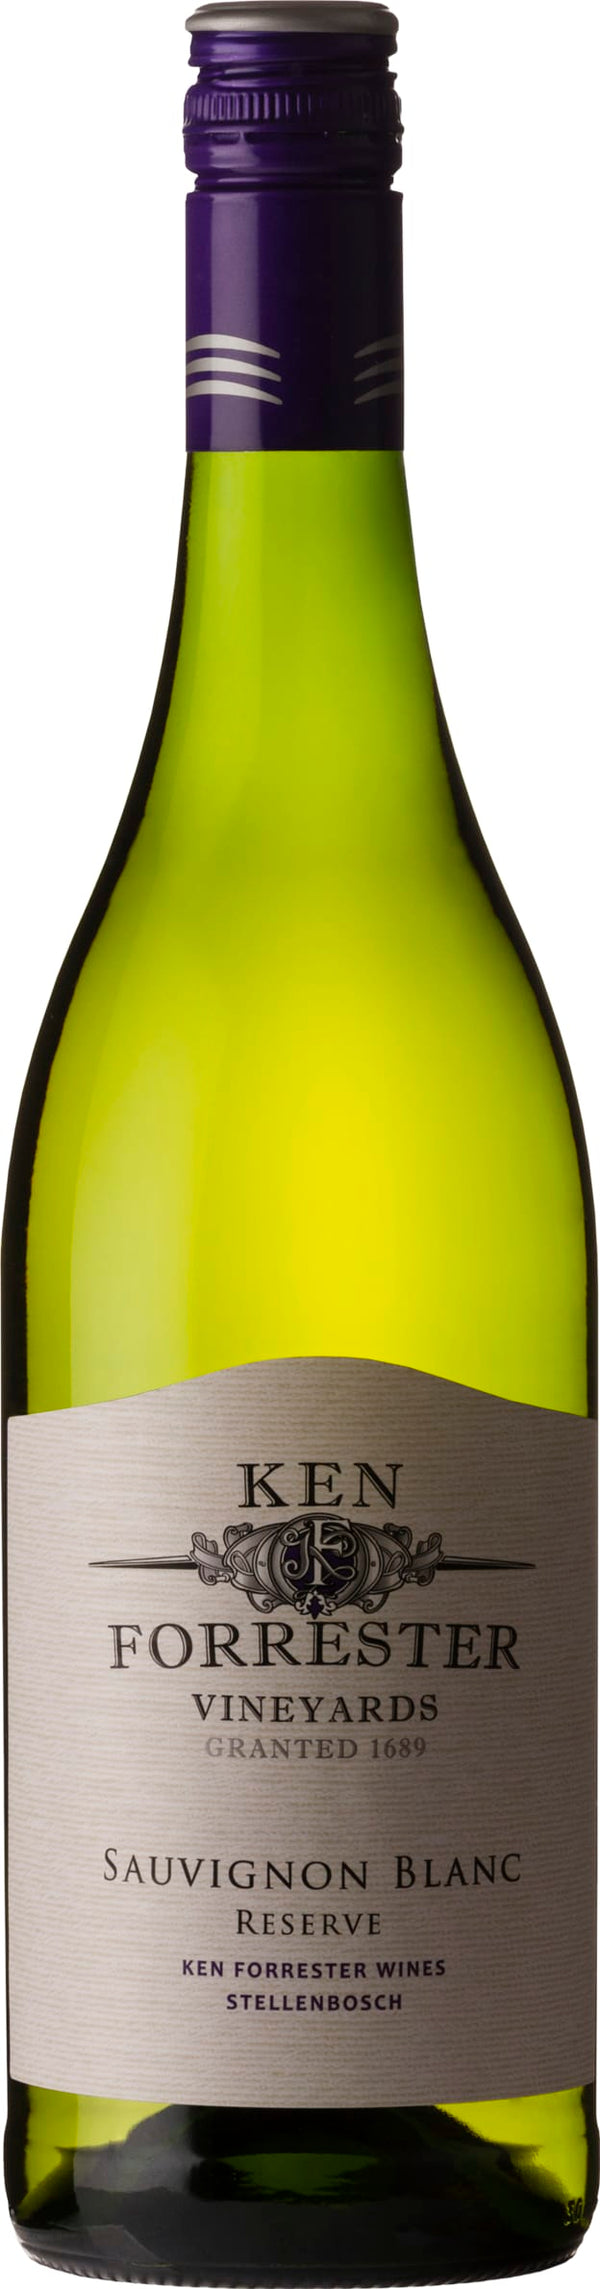 Ken Forrester Wines 2022 Sauvignon Blanc Reserve, Ken Forrester Wines 2022 6x75cl - Just Wines 